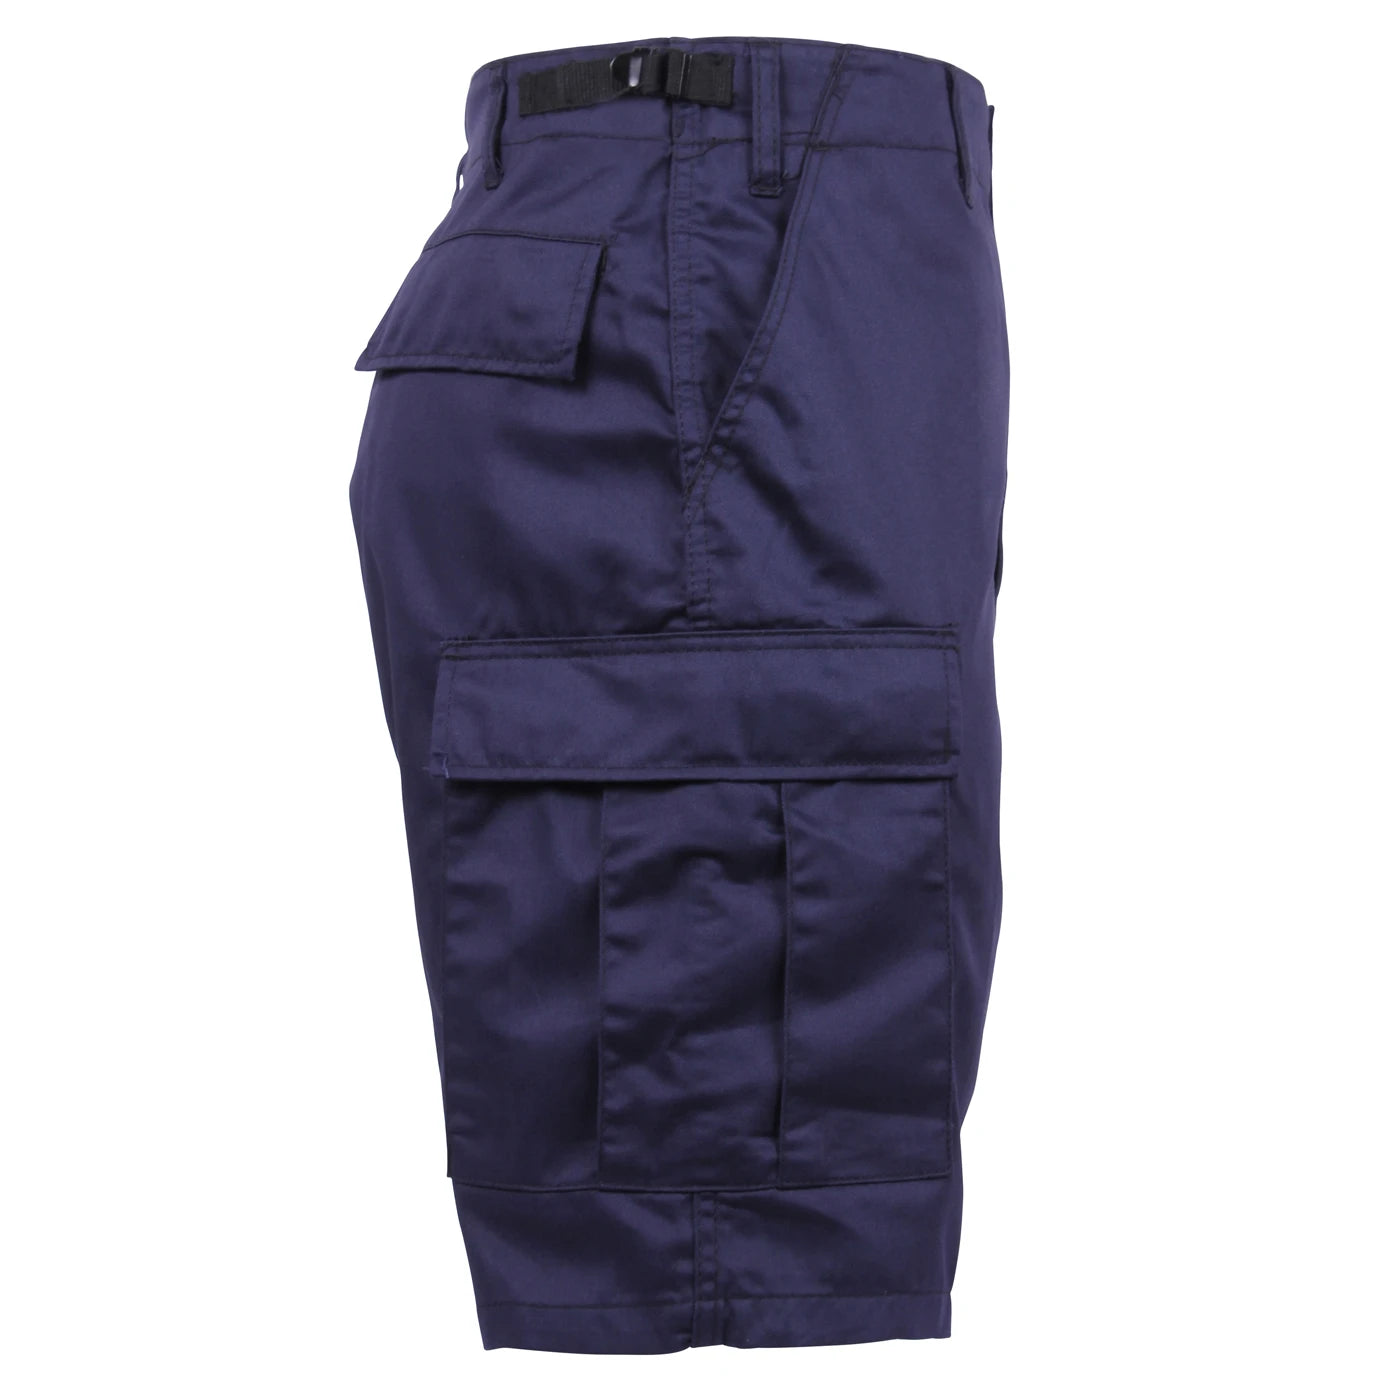 BDU Shorts - Navy Blue